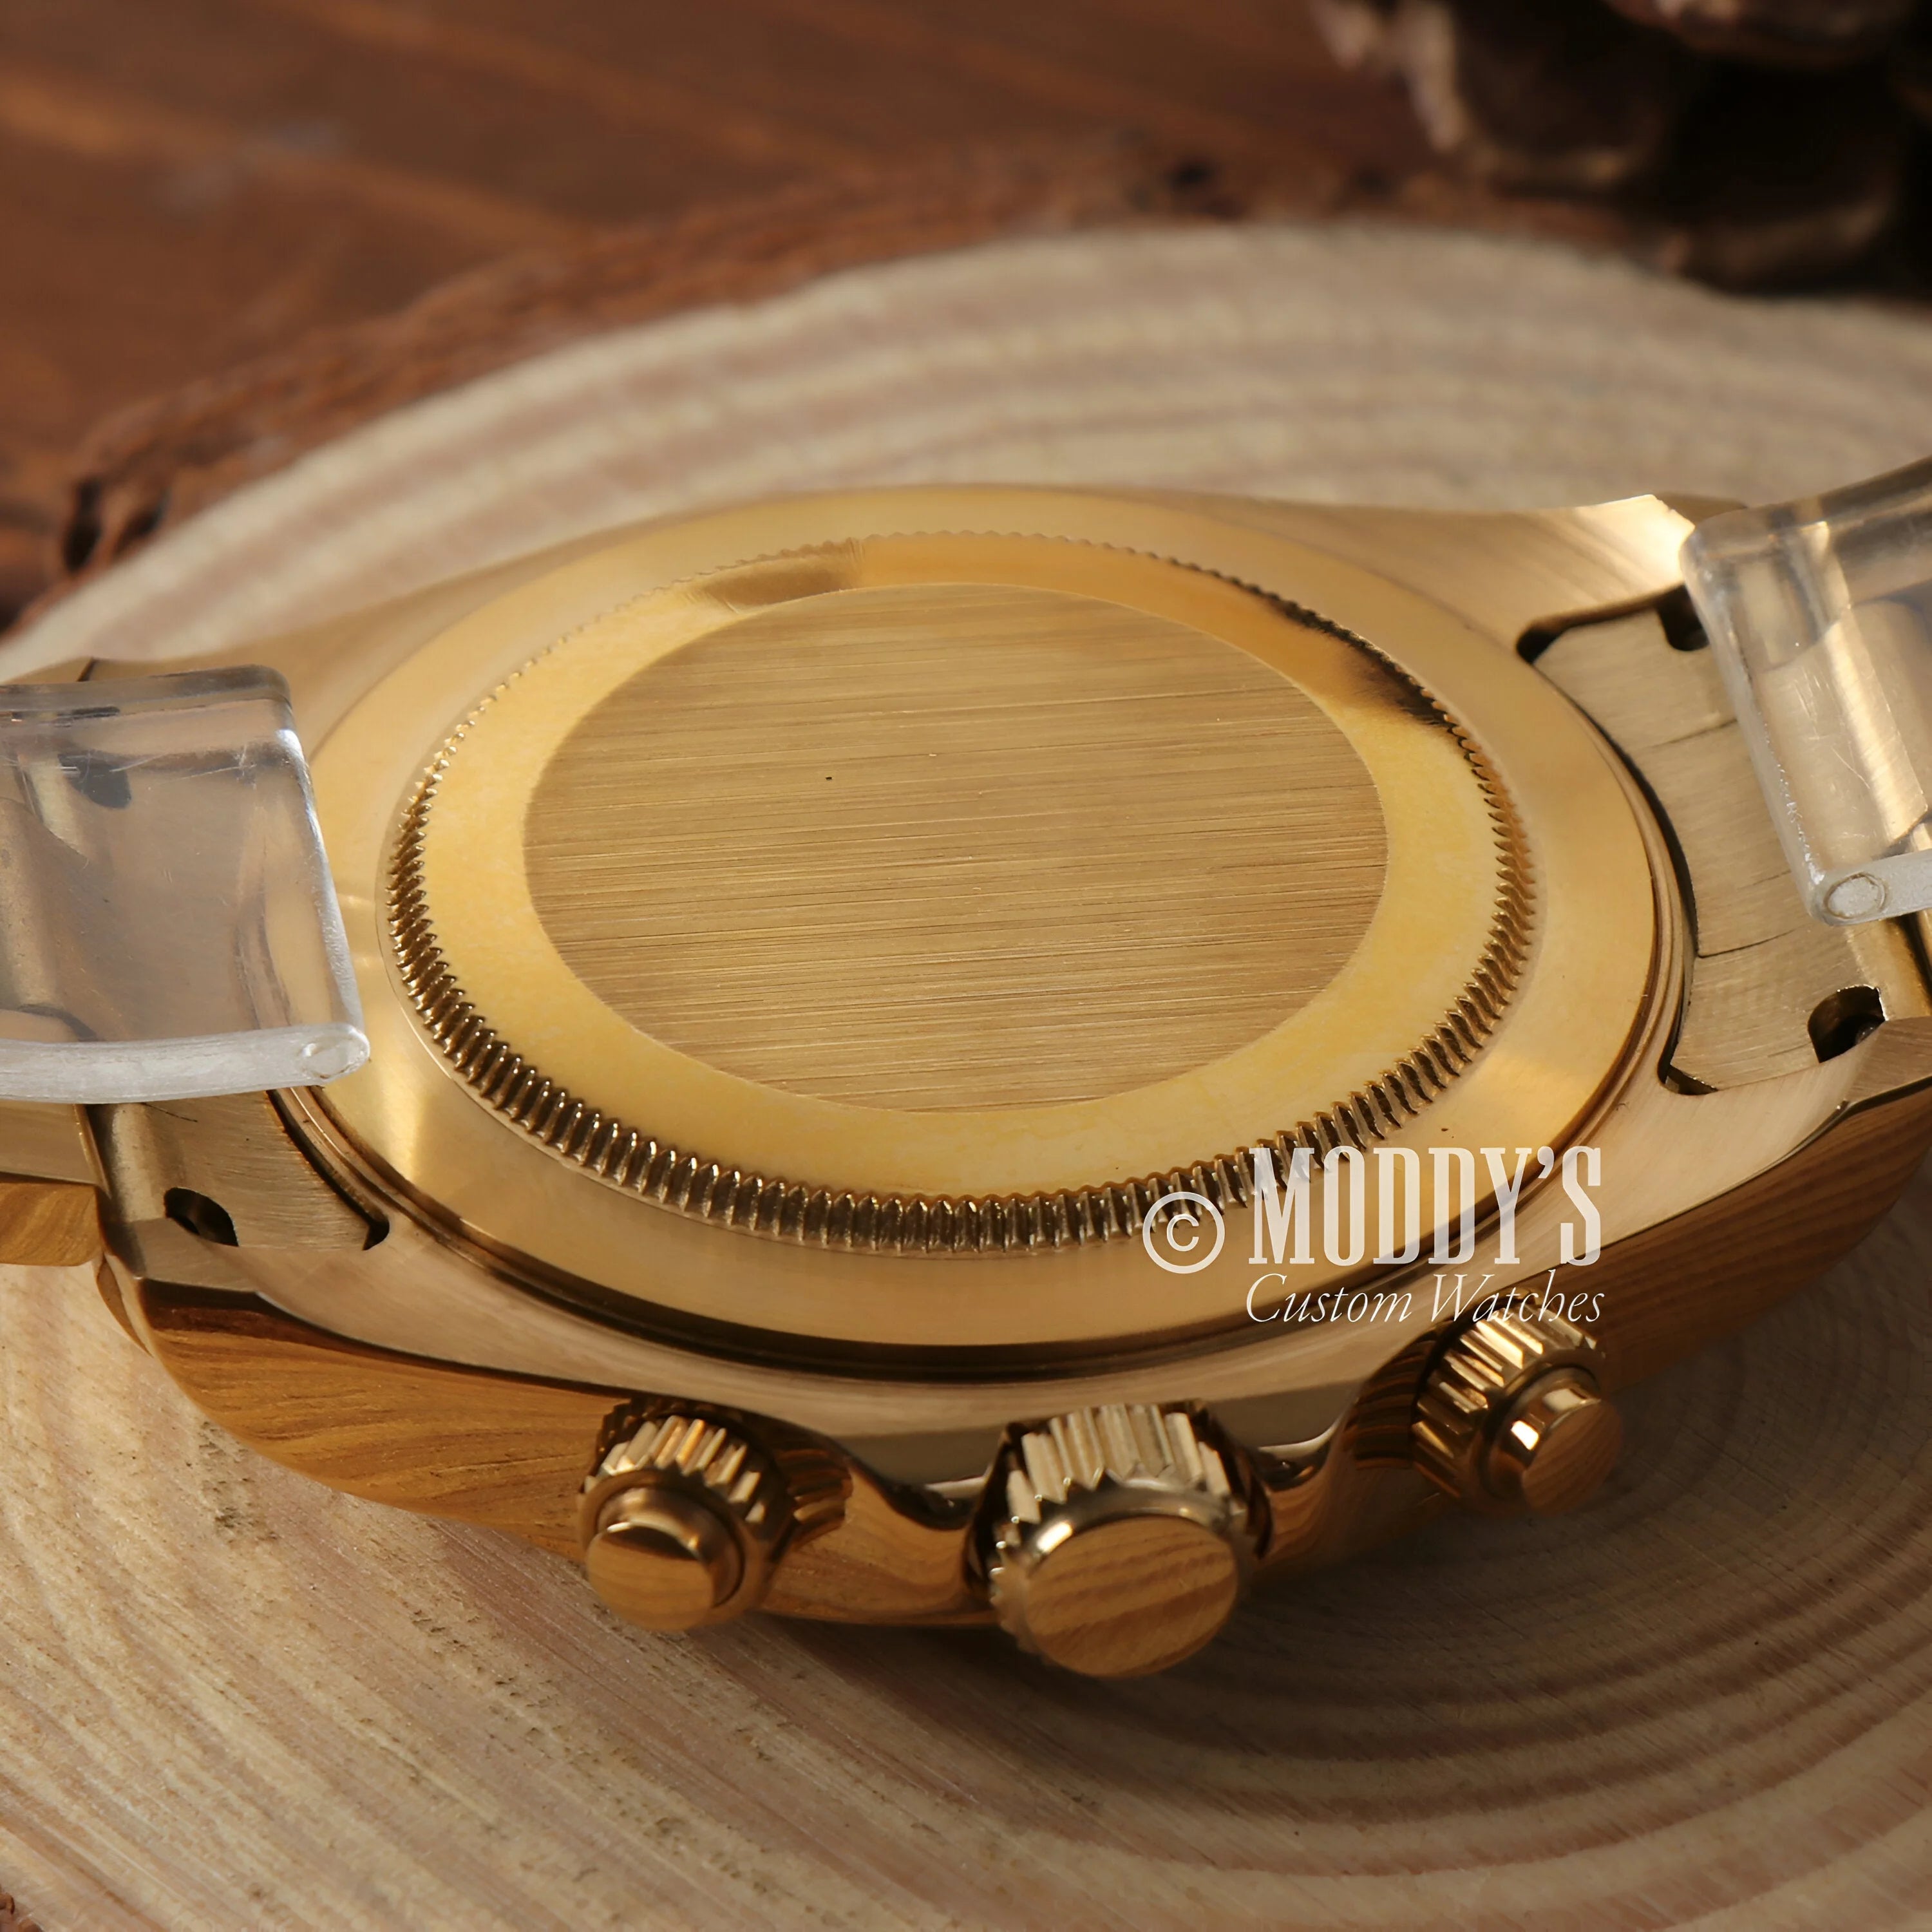 Seitona Gold - Green: a Luxury Mod Daytona Gold Wristwatch With Chronograph Function